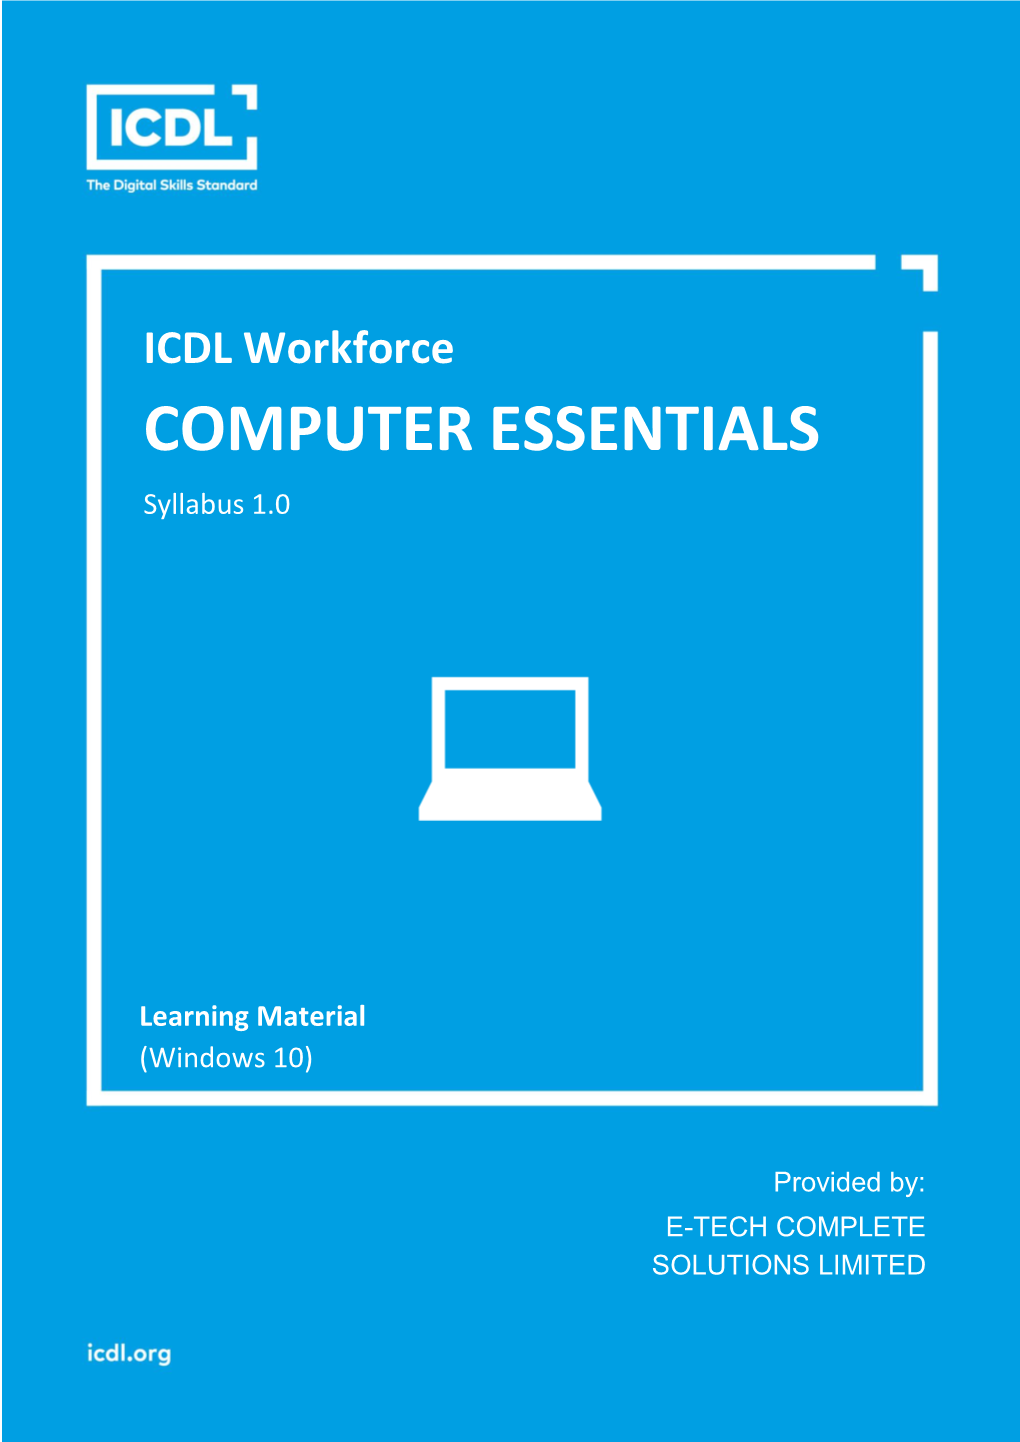 ICDL Computer Essentials 1.0 Windows 10